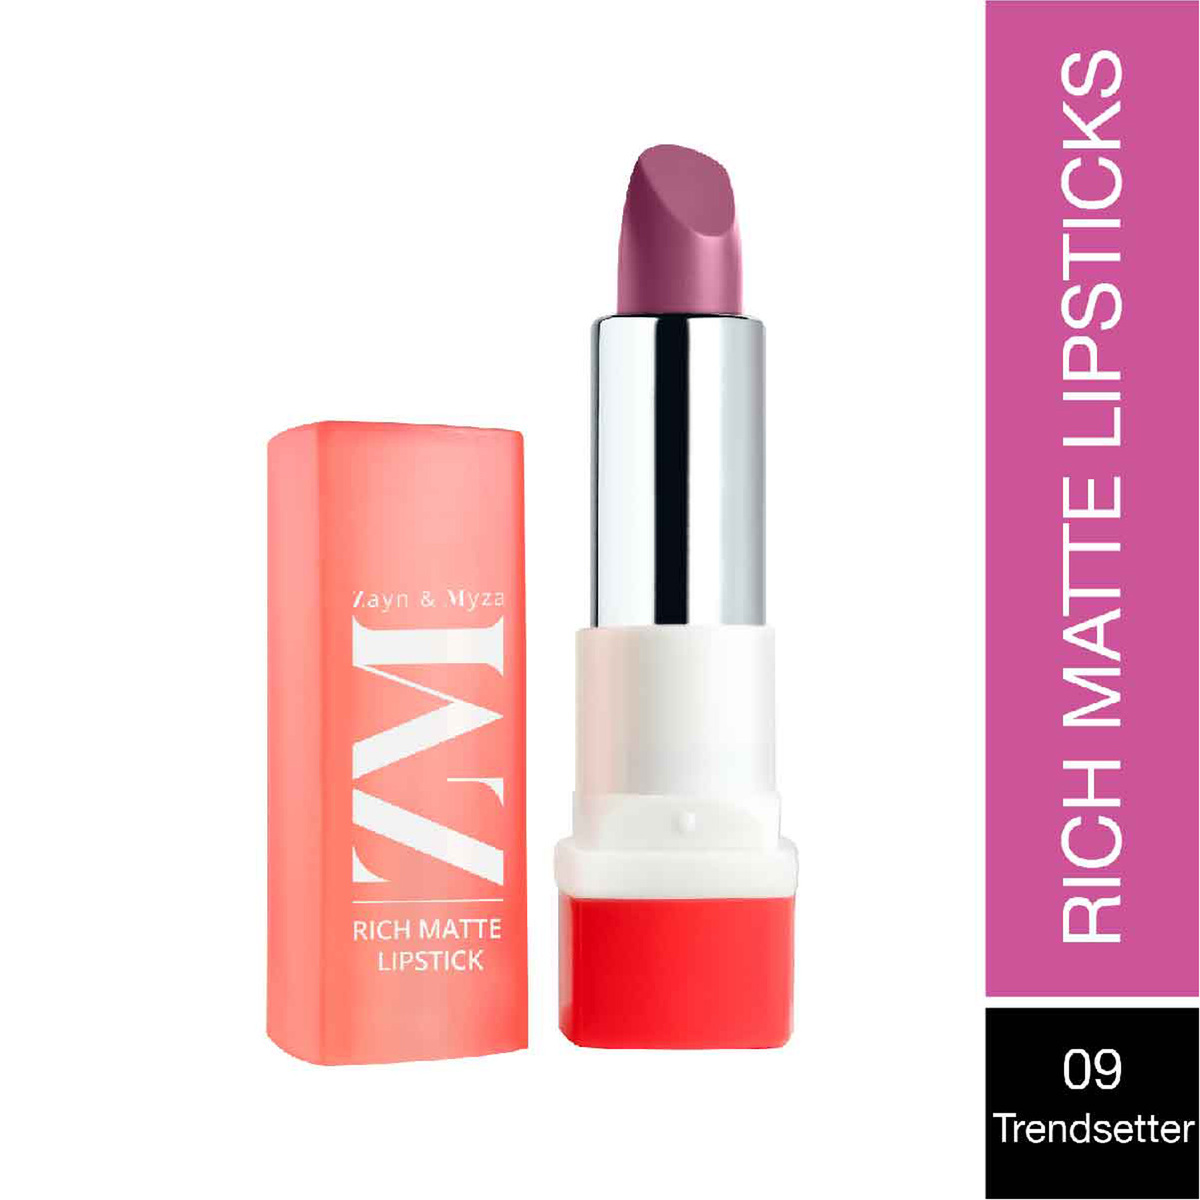 Zayn & Myza Rich Matte Lipstick, 09 Trend Setter, 4.2 g